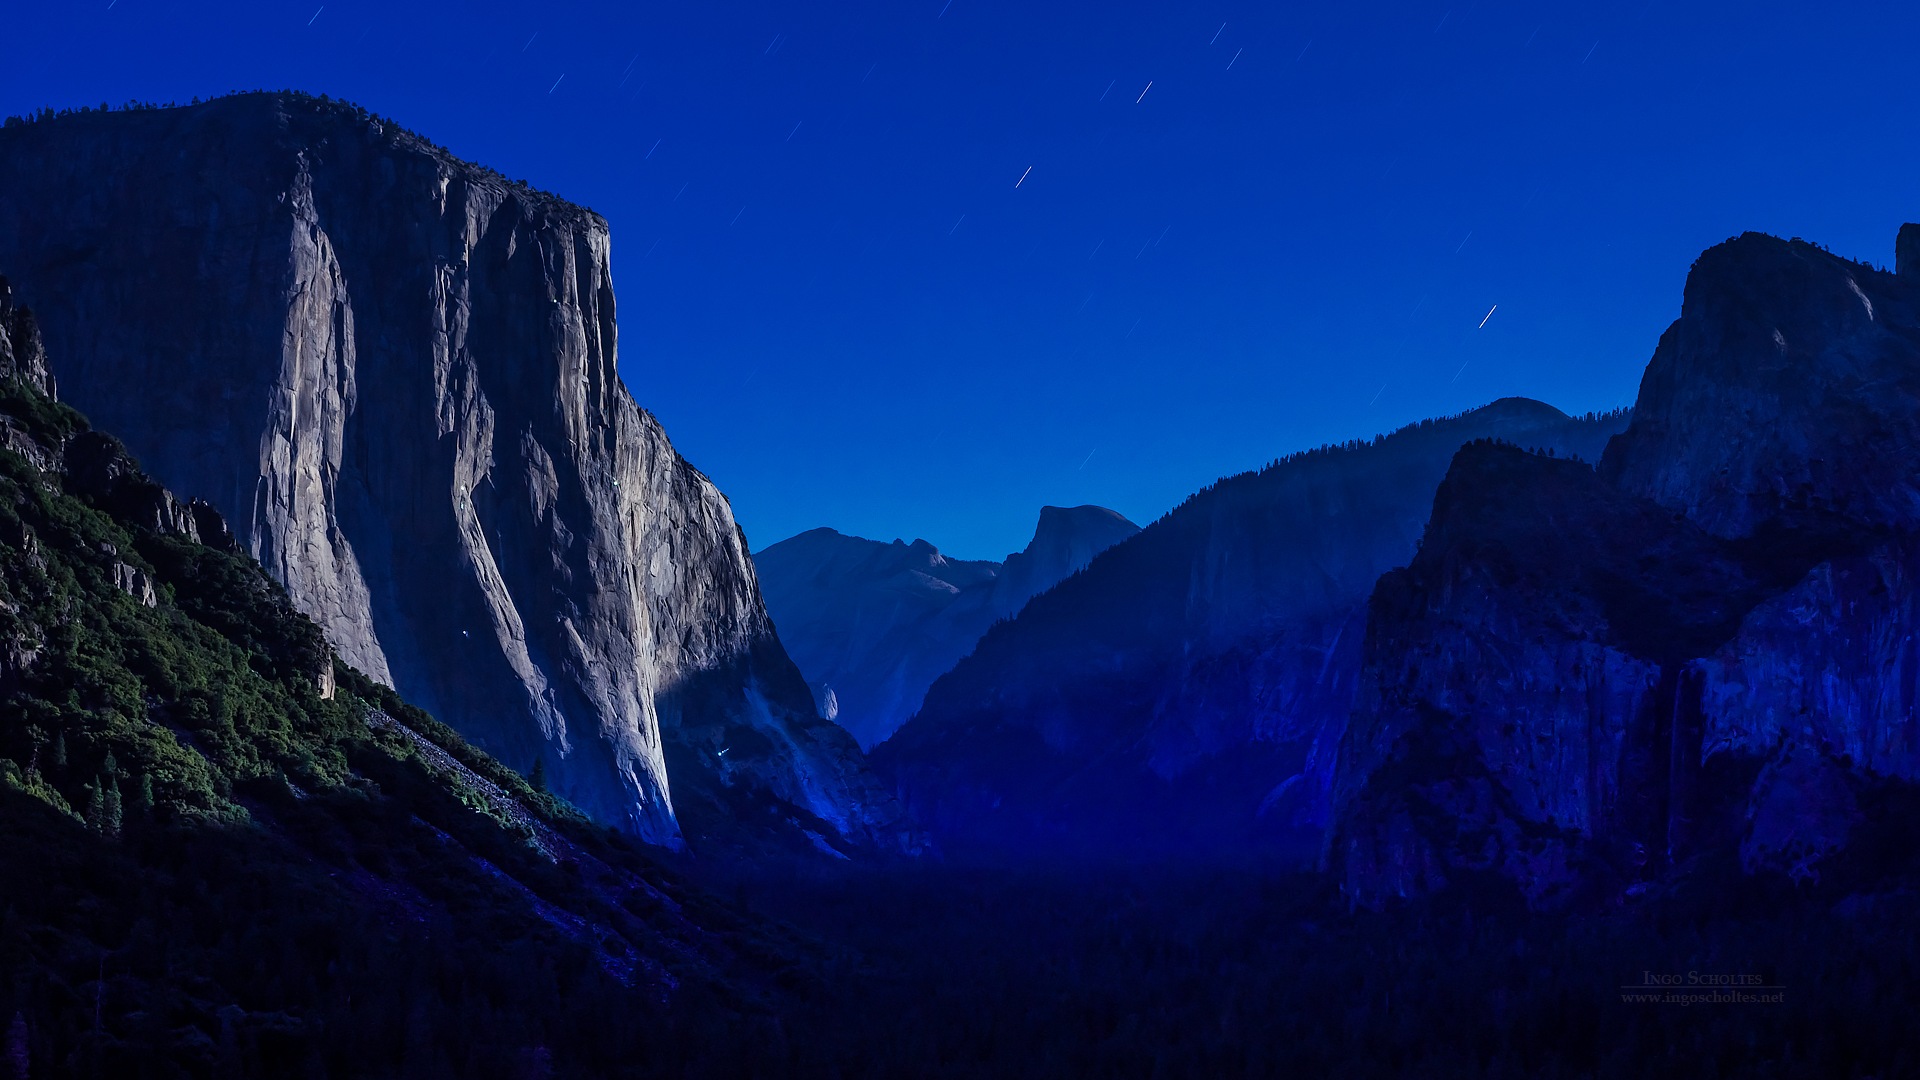 Windows 8 Thema, Yosemite National Park HD Wallpaper #14 - 1920x1080